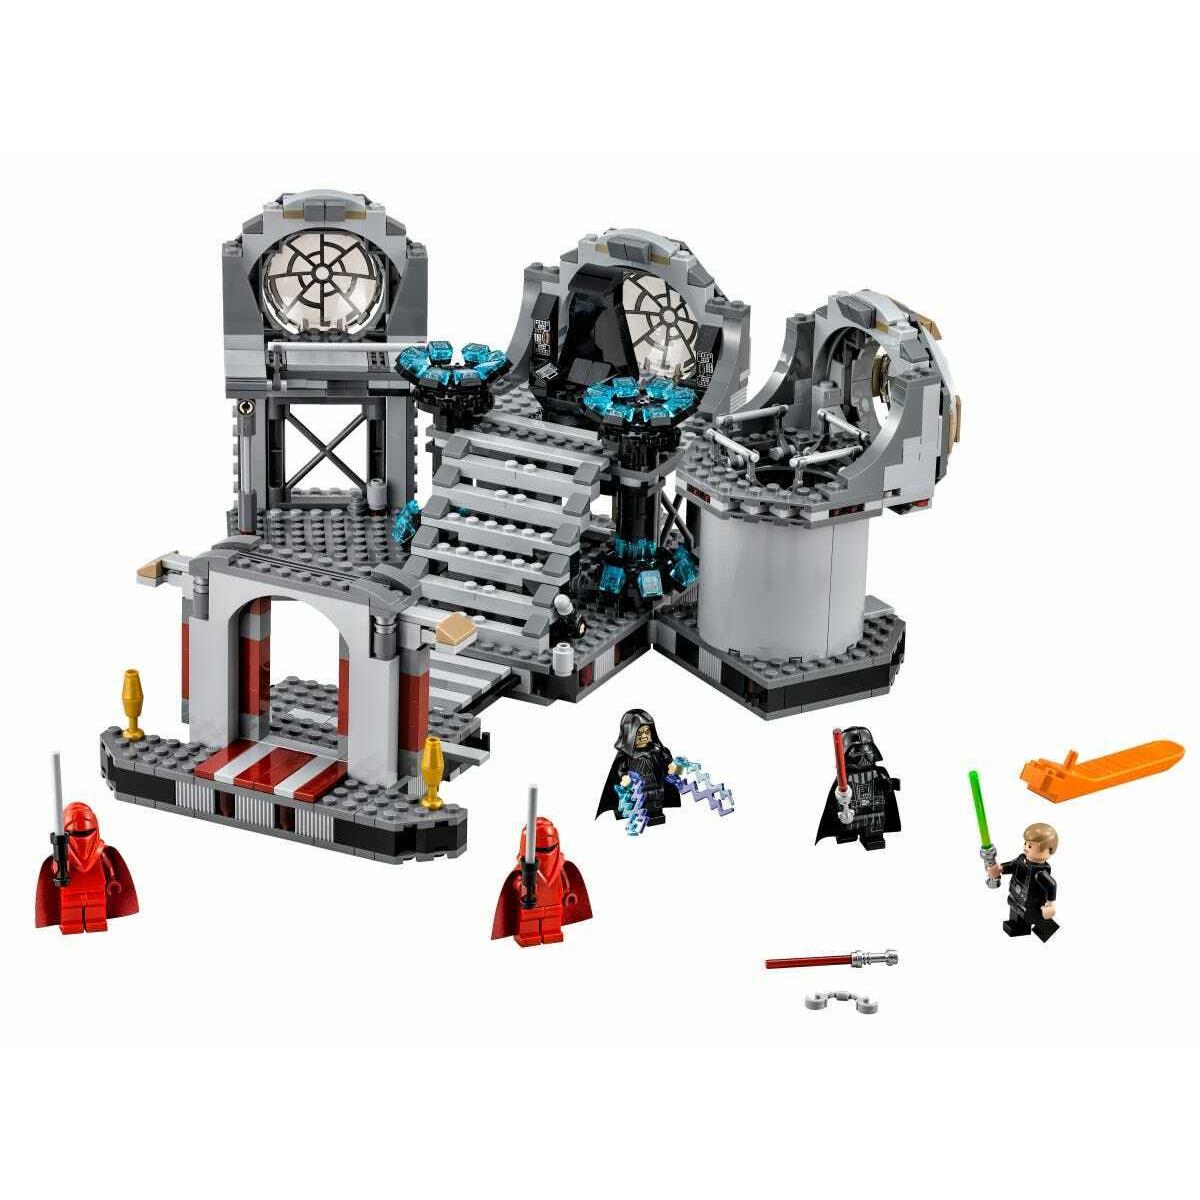 Lego Star Wars Death Star Final Duel Set 75093